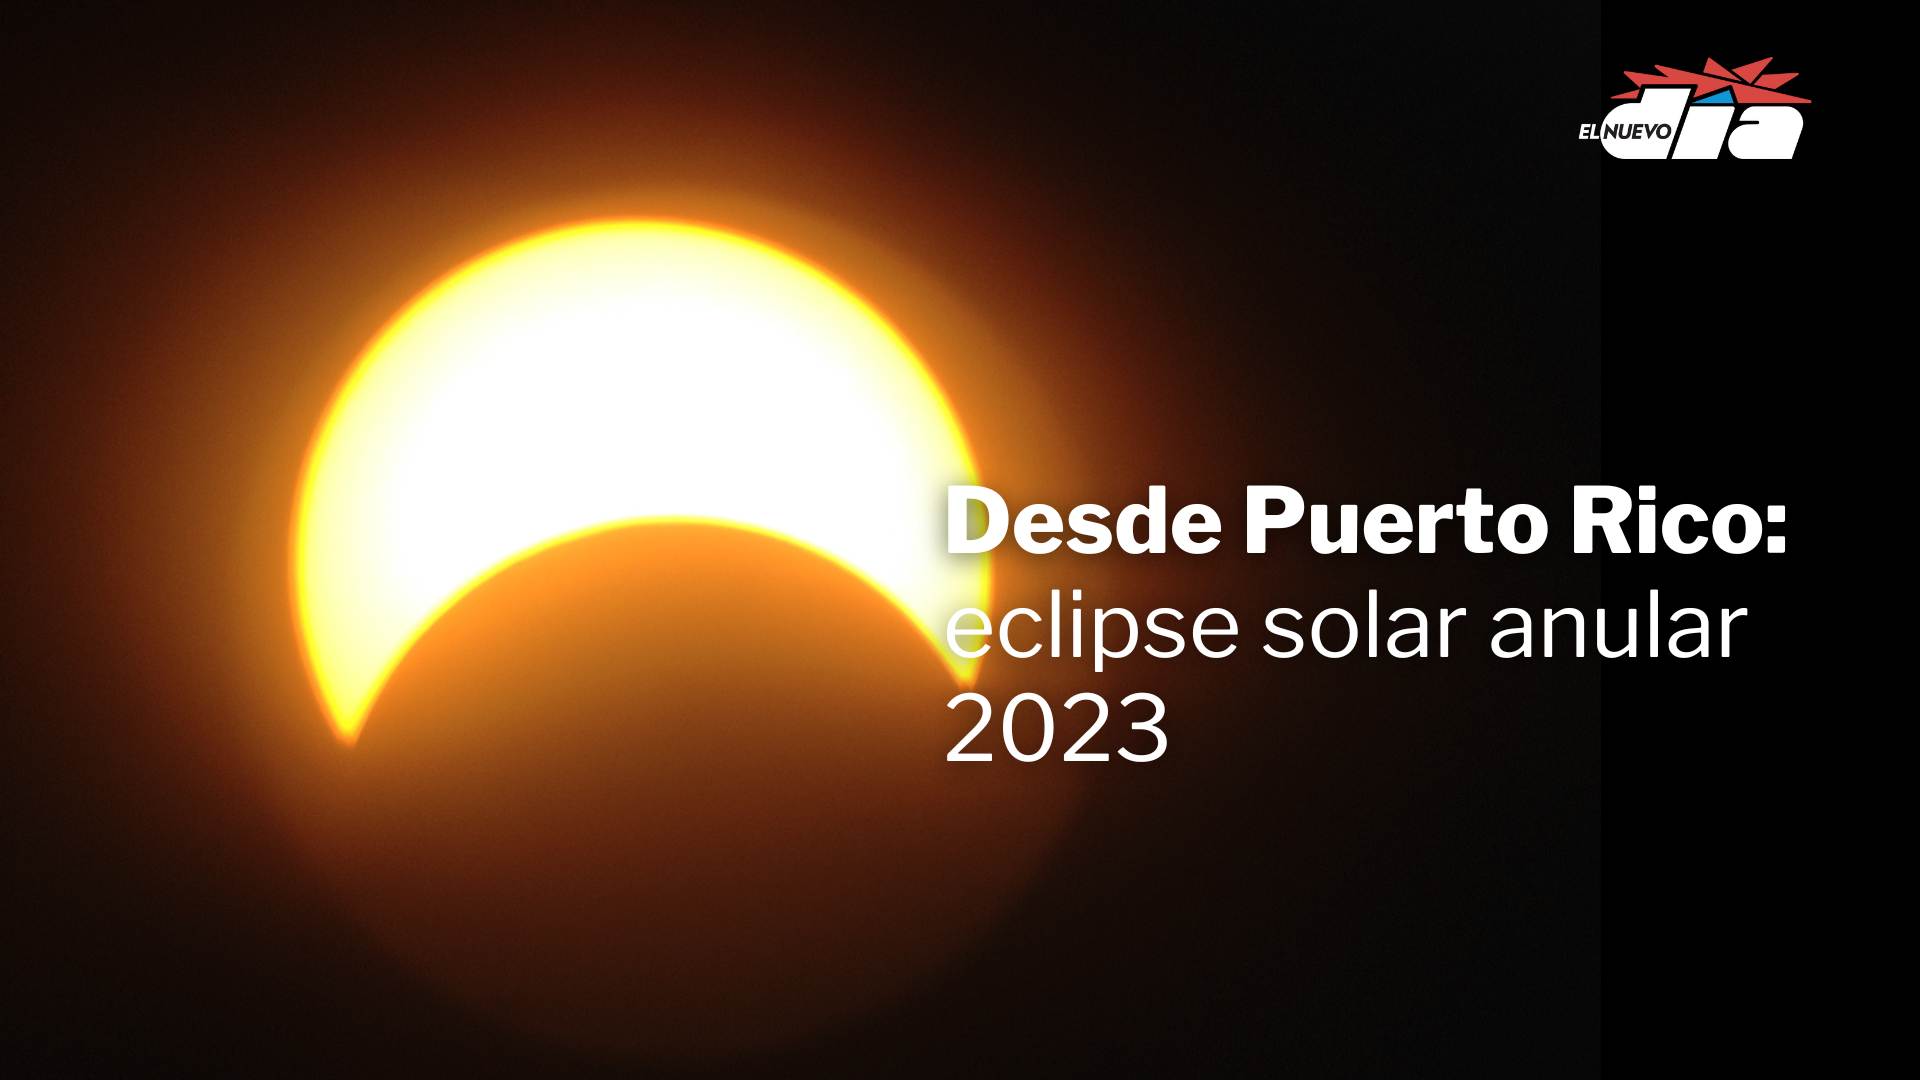 Desde Puerto Rico eclipse solar anular 2023